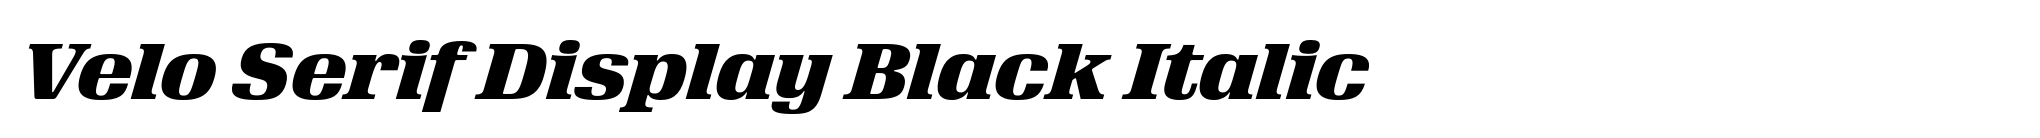 Velo Serif Display Black Italic image